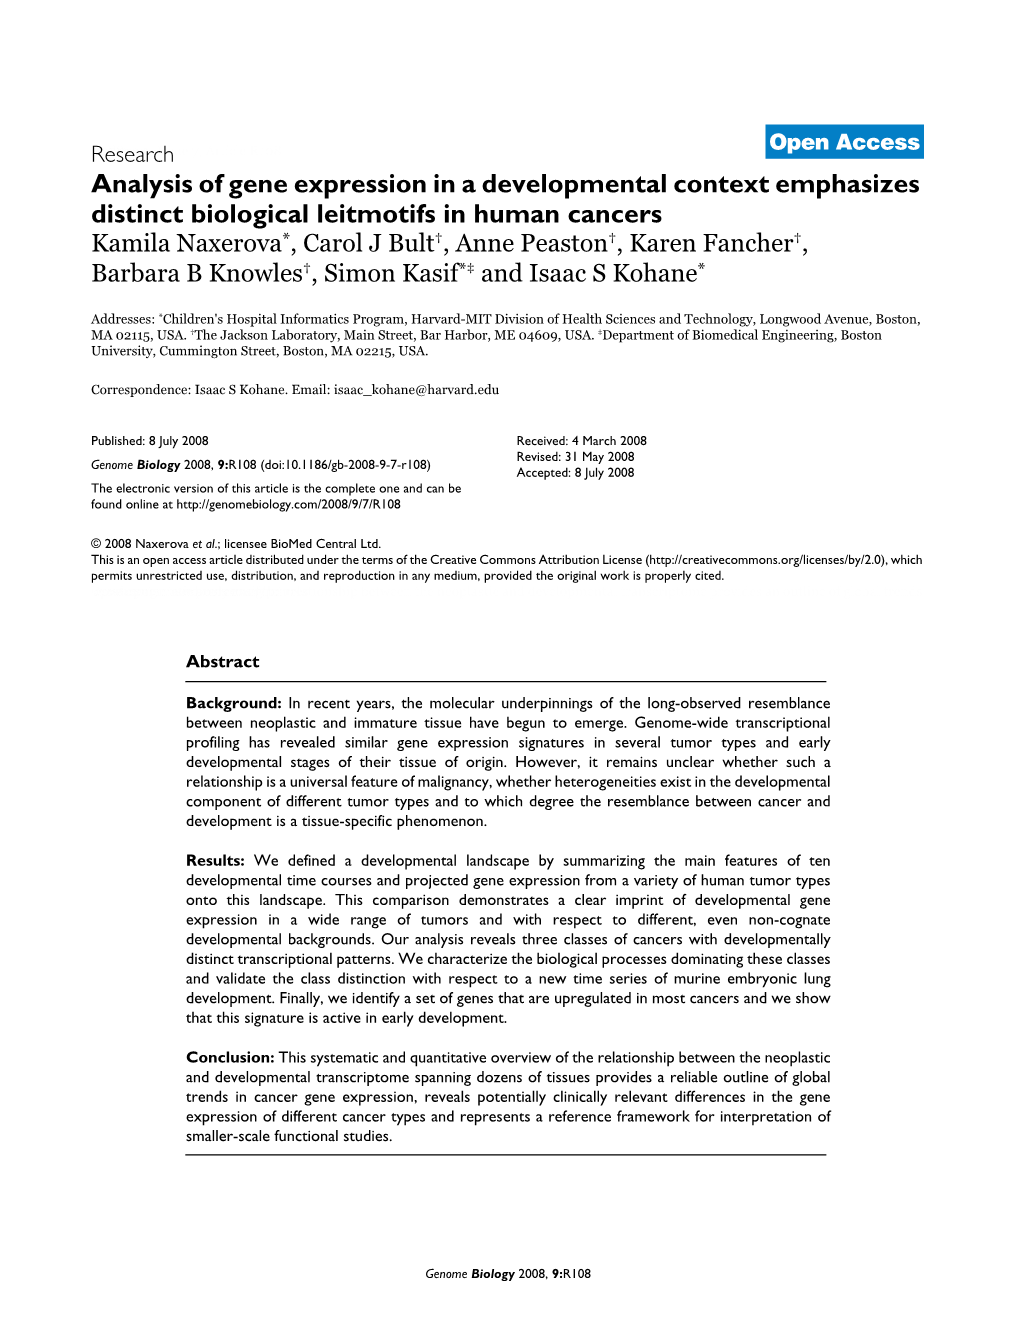 Analysis of Gene Expression in a Developmental